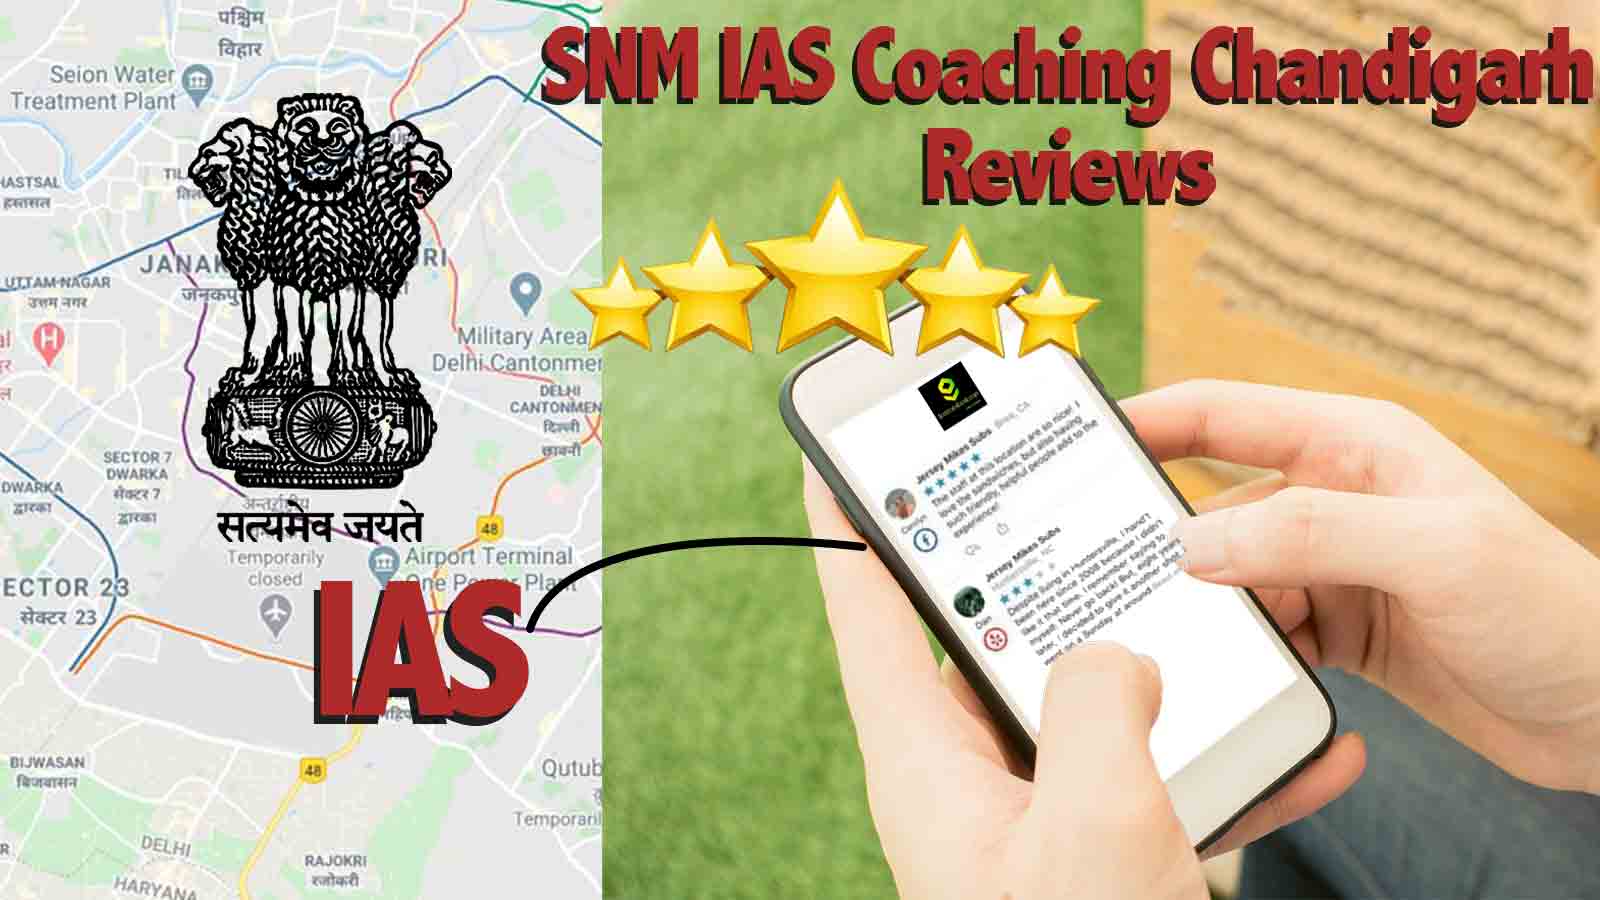 SNM IAS Coaching Chandigarh Reviews